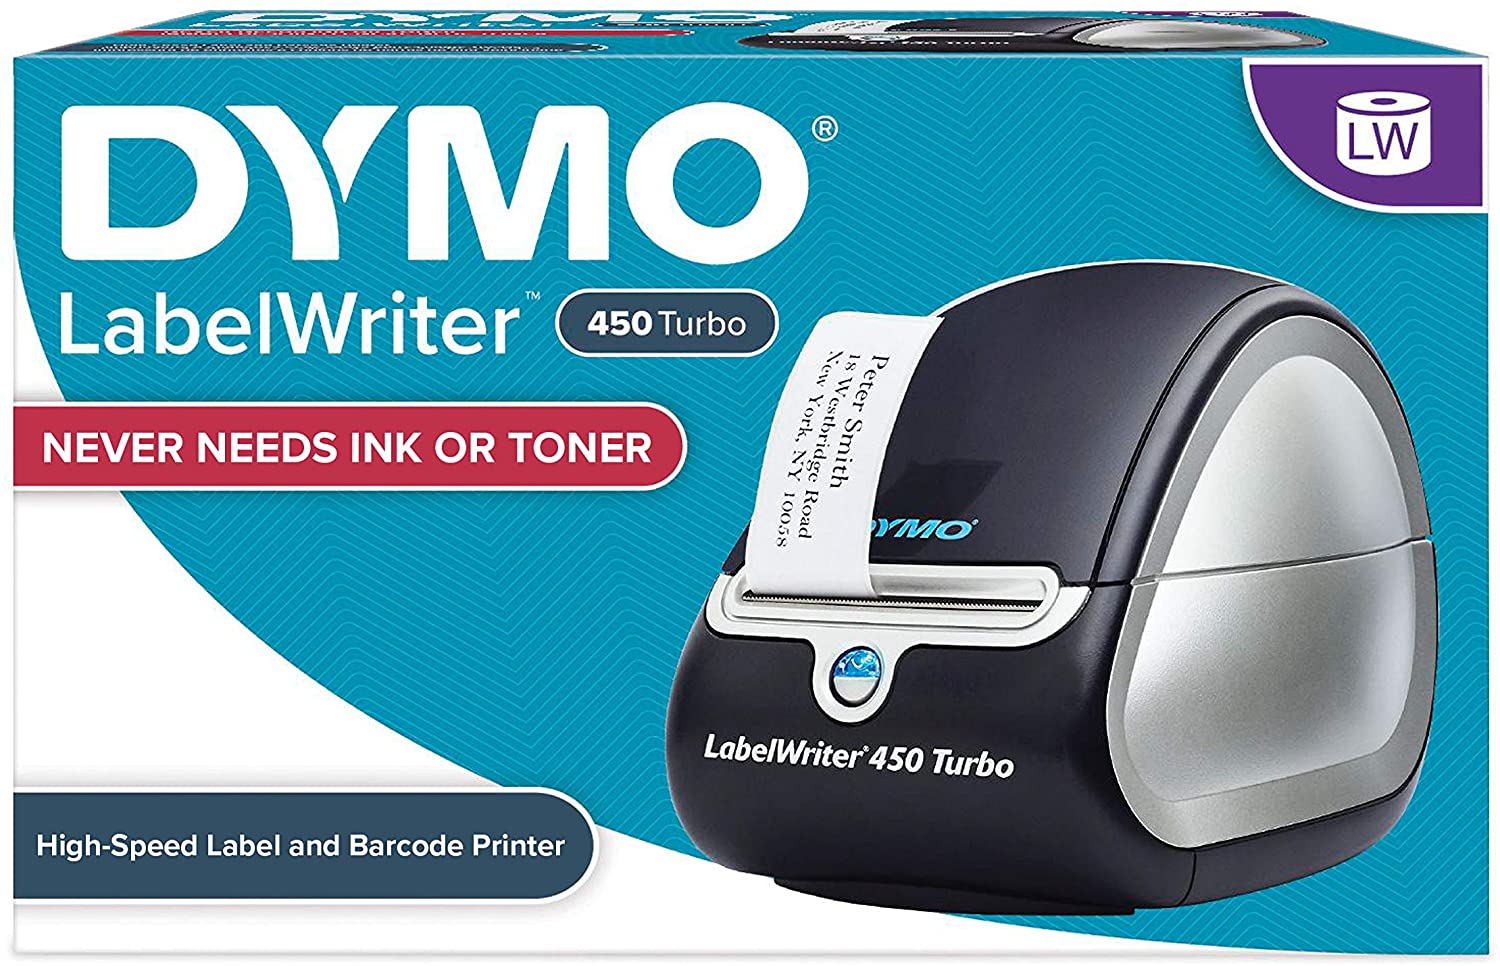 DYMO LabelWriter 450 Turbo Direct Thermal Label Writer